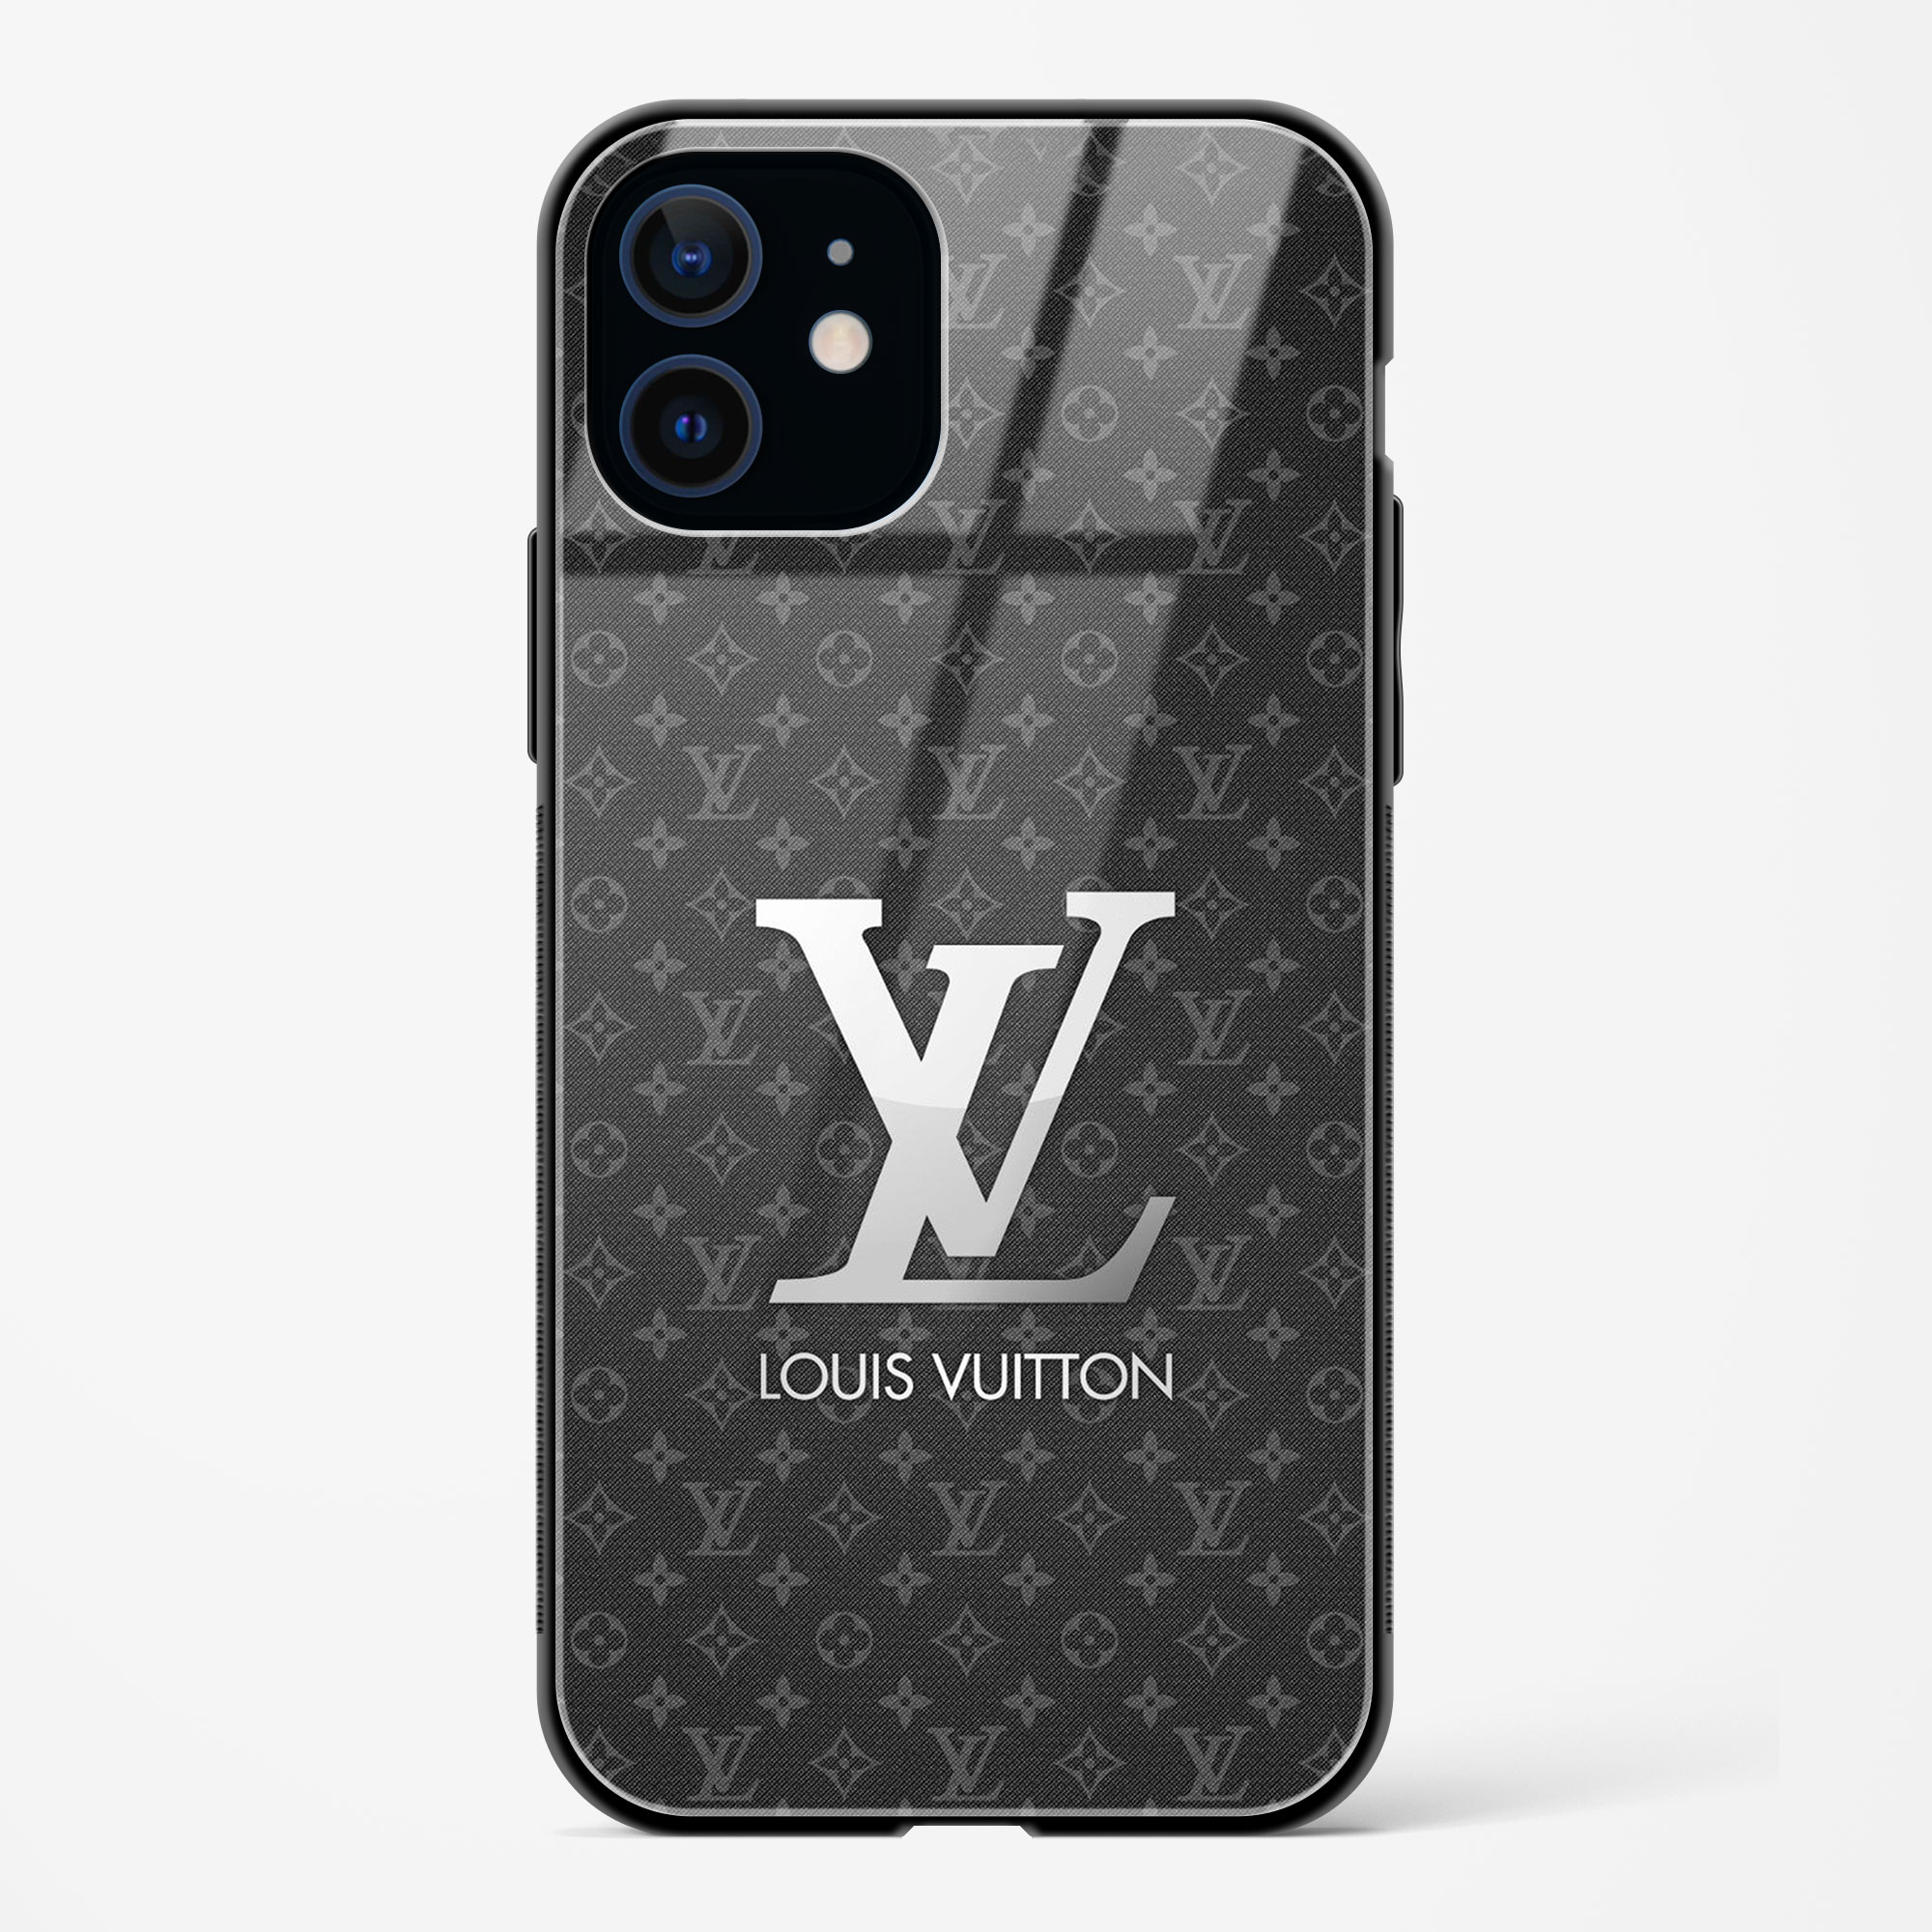 Louis Vuitton Black iPhone 12 Mini Case